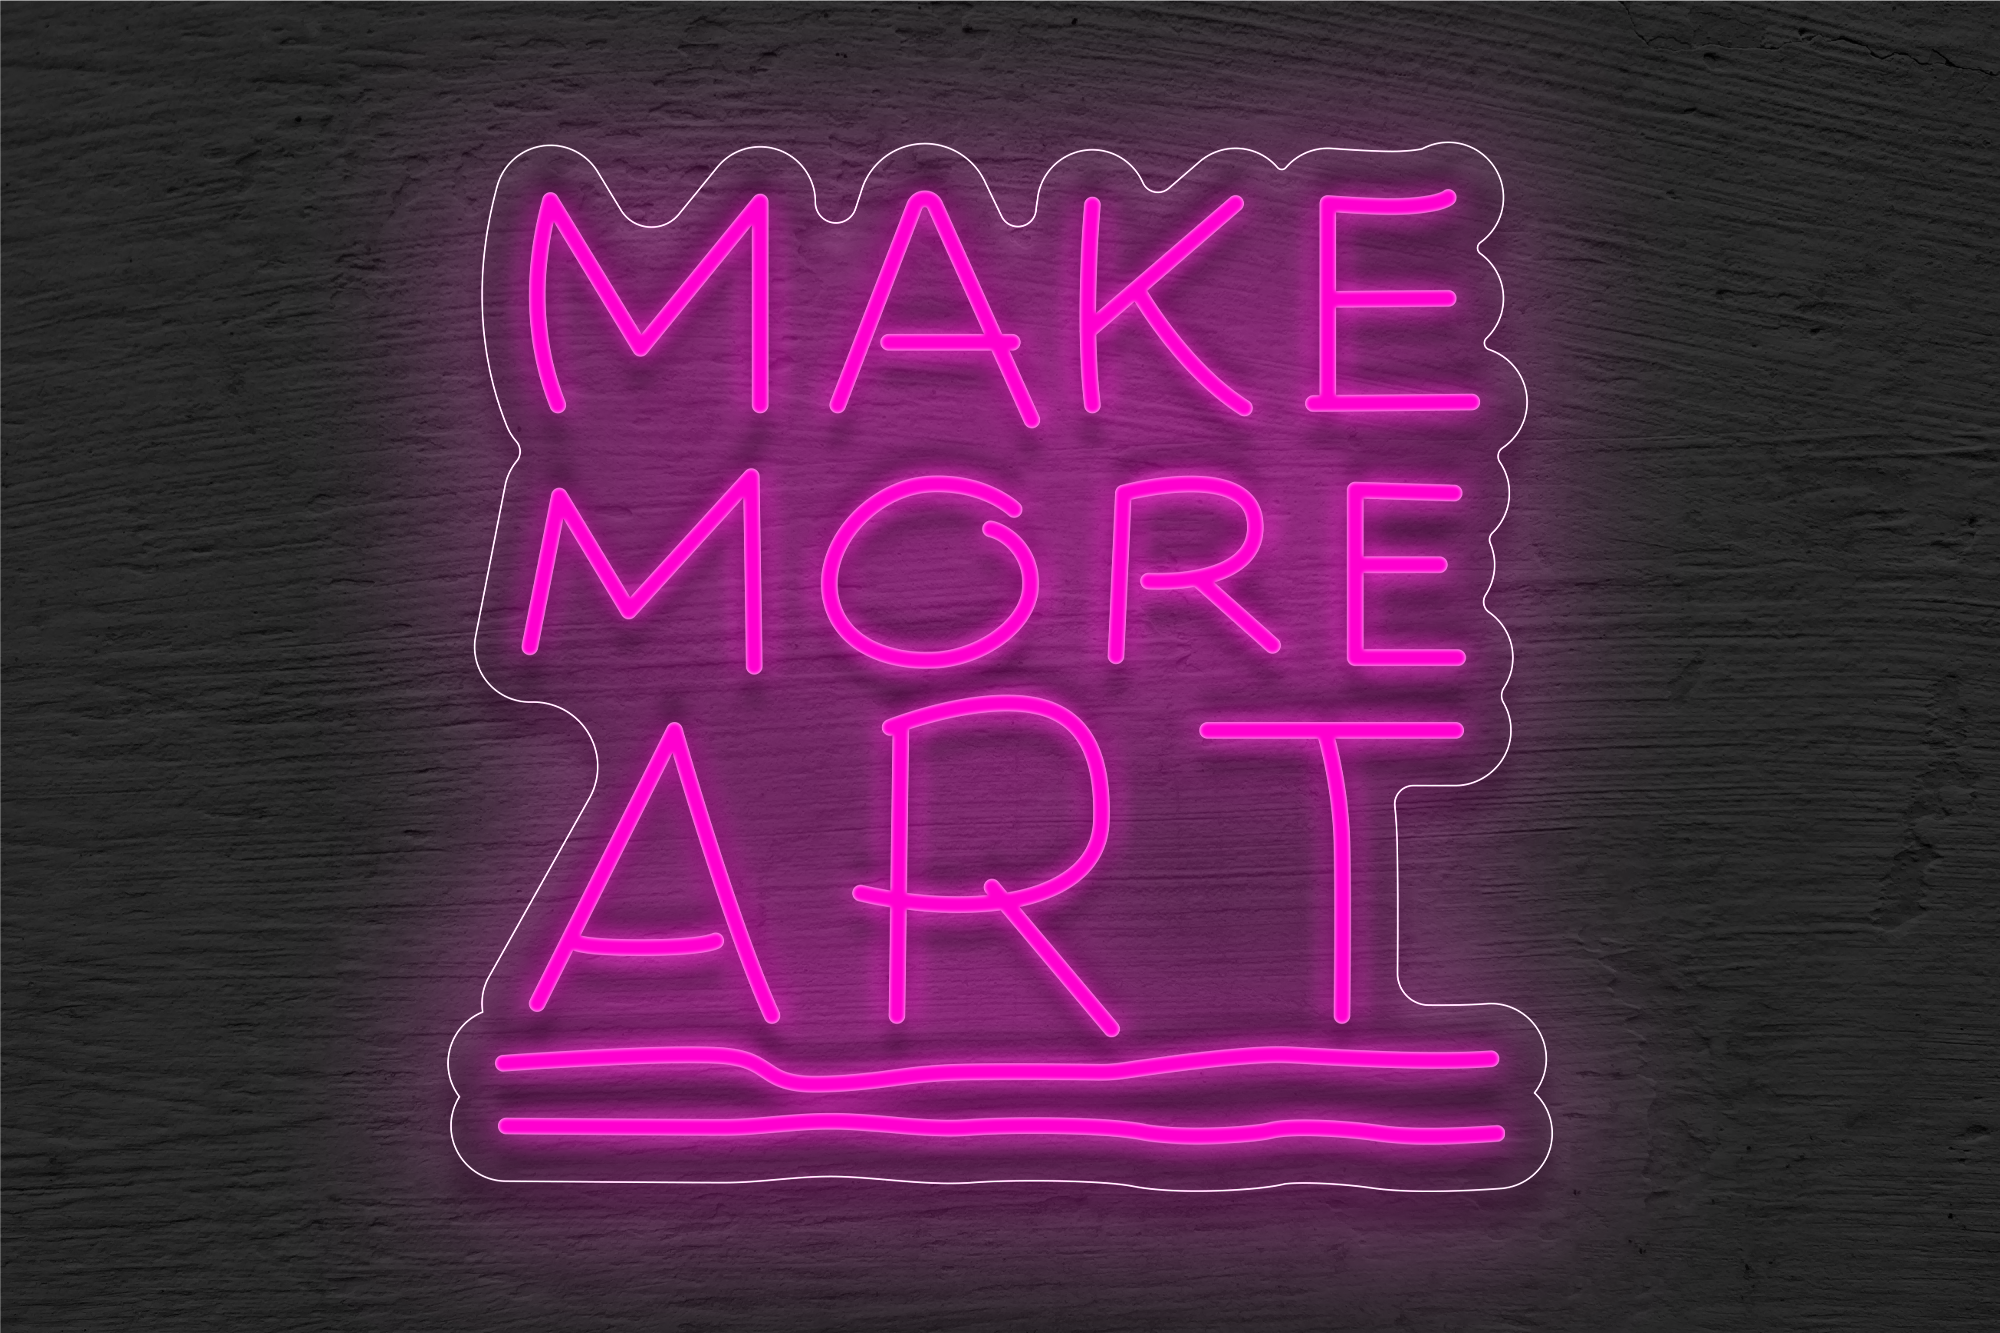 "Make More ART" LED Neon Sign